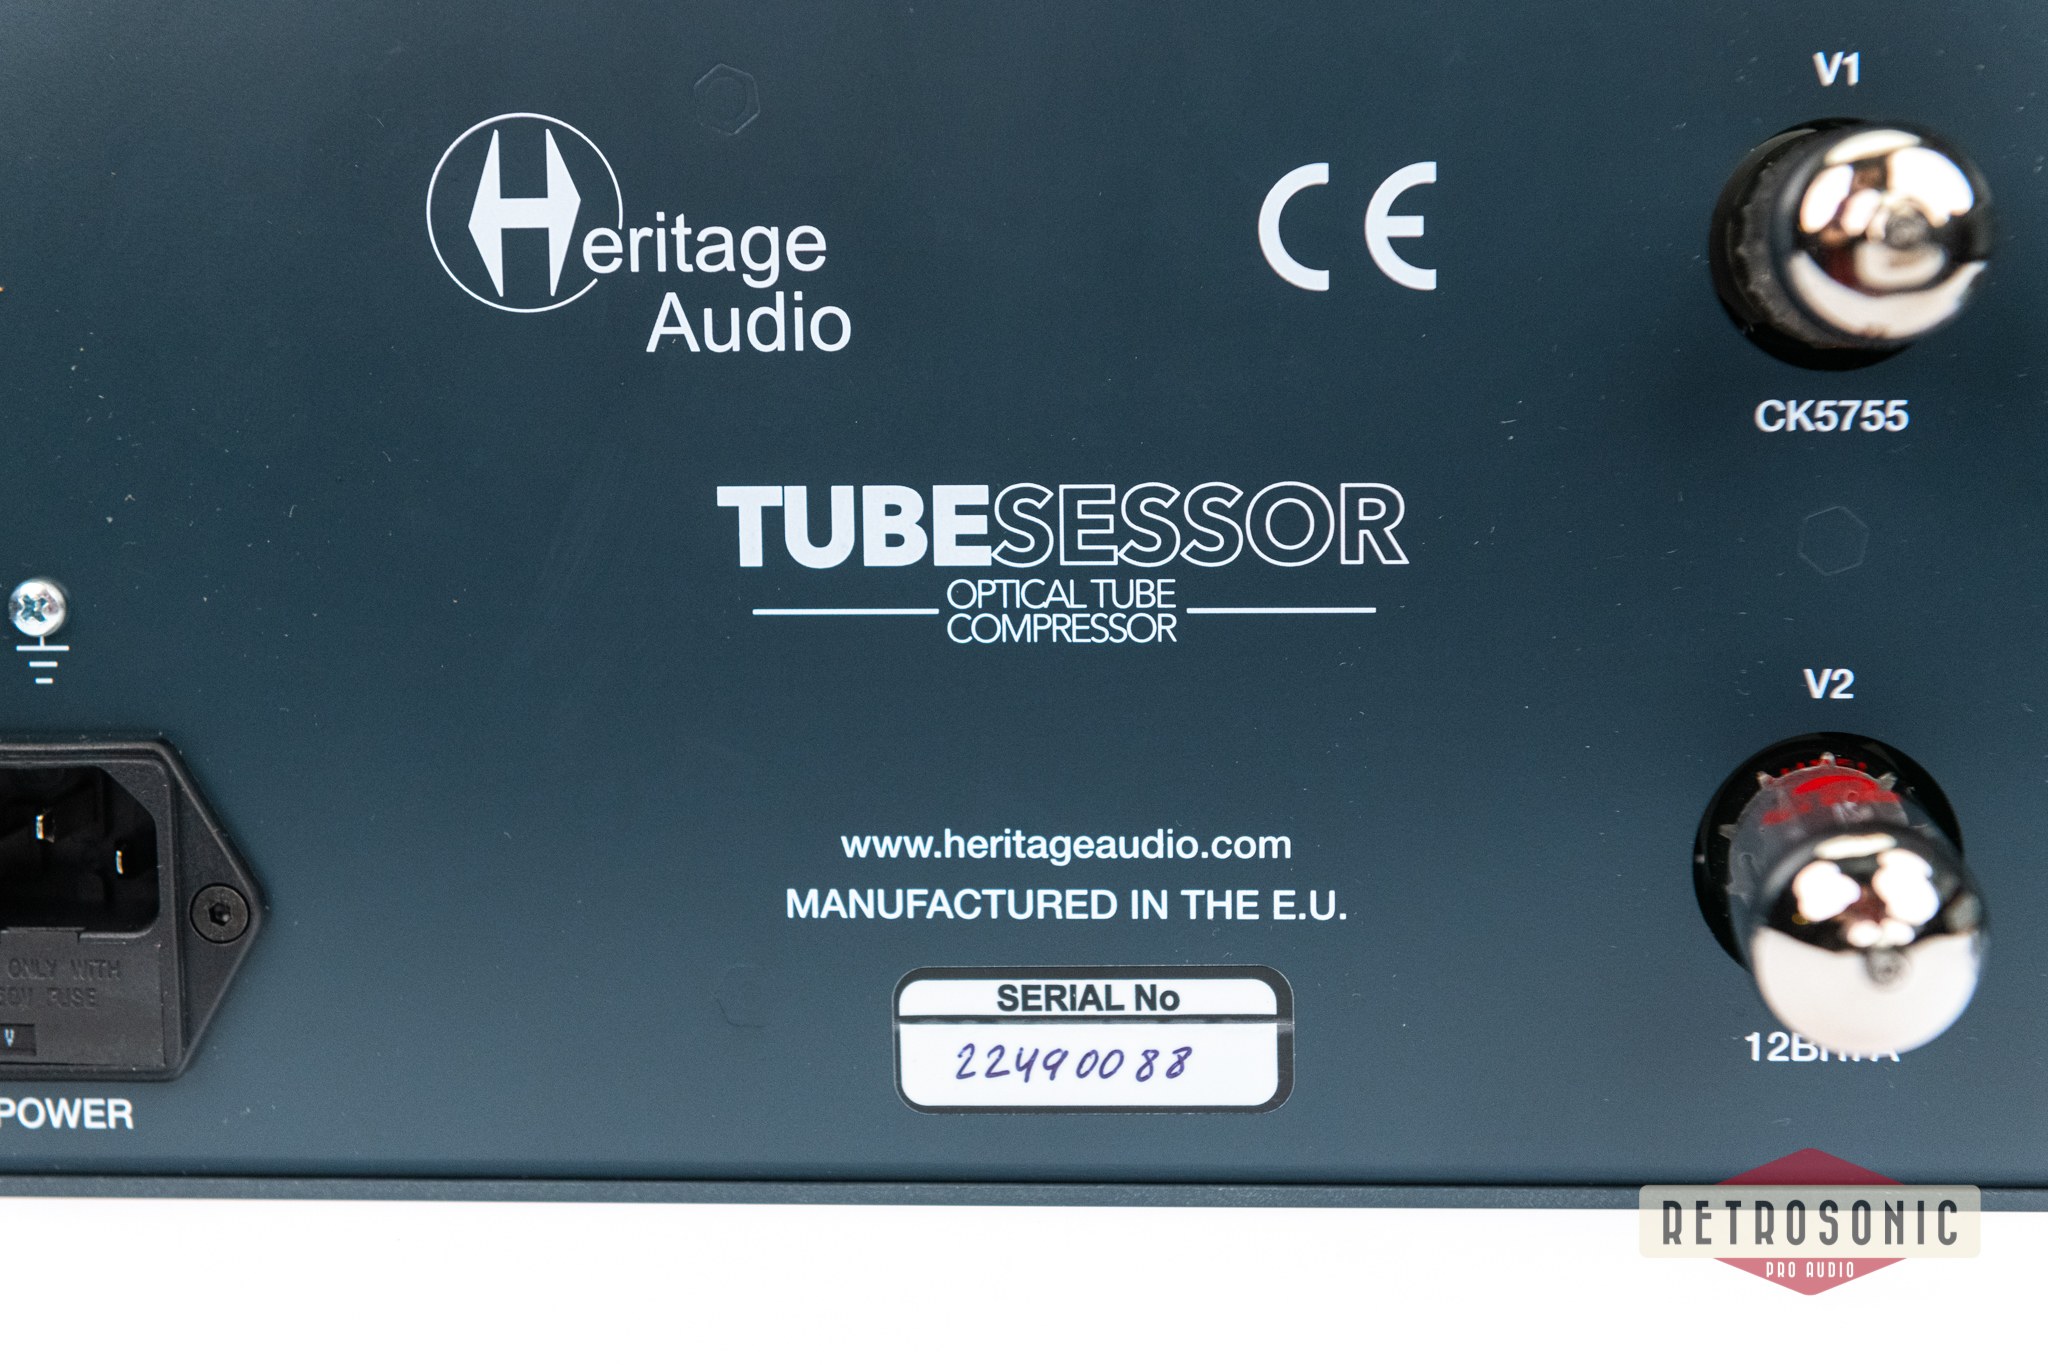 Heritage Audio Tubesessor Optical Tube Compressor